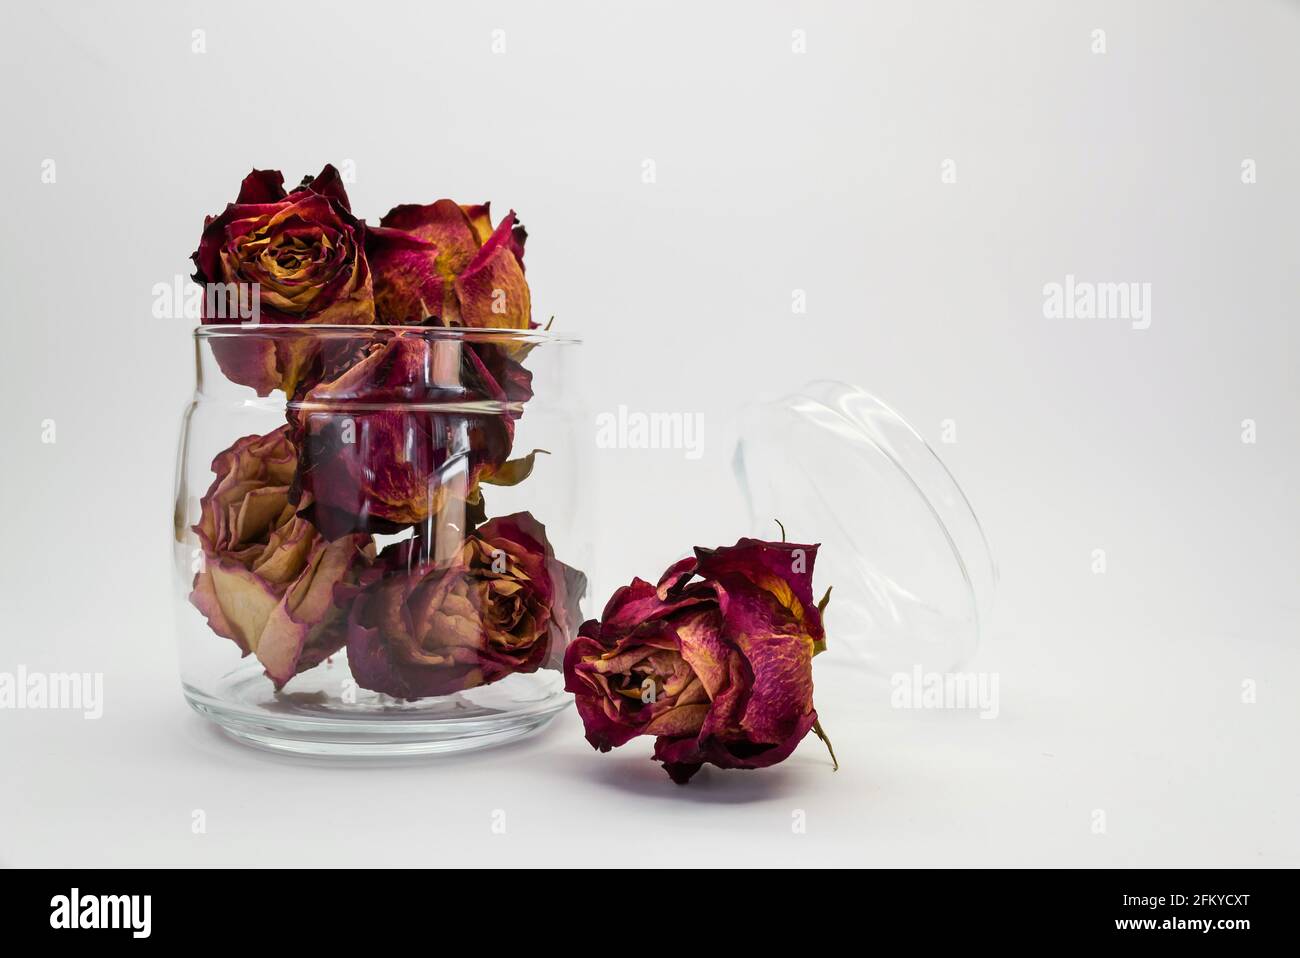 Dried Roses with Polaroid Photo by Estel Arts - Gylo